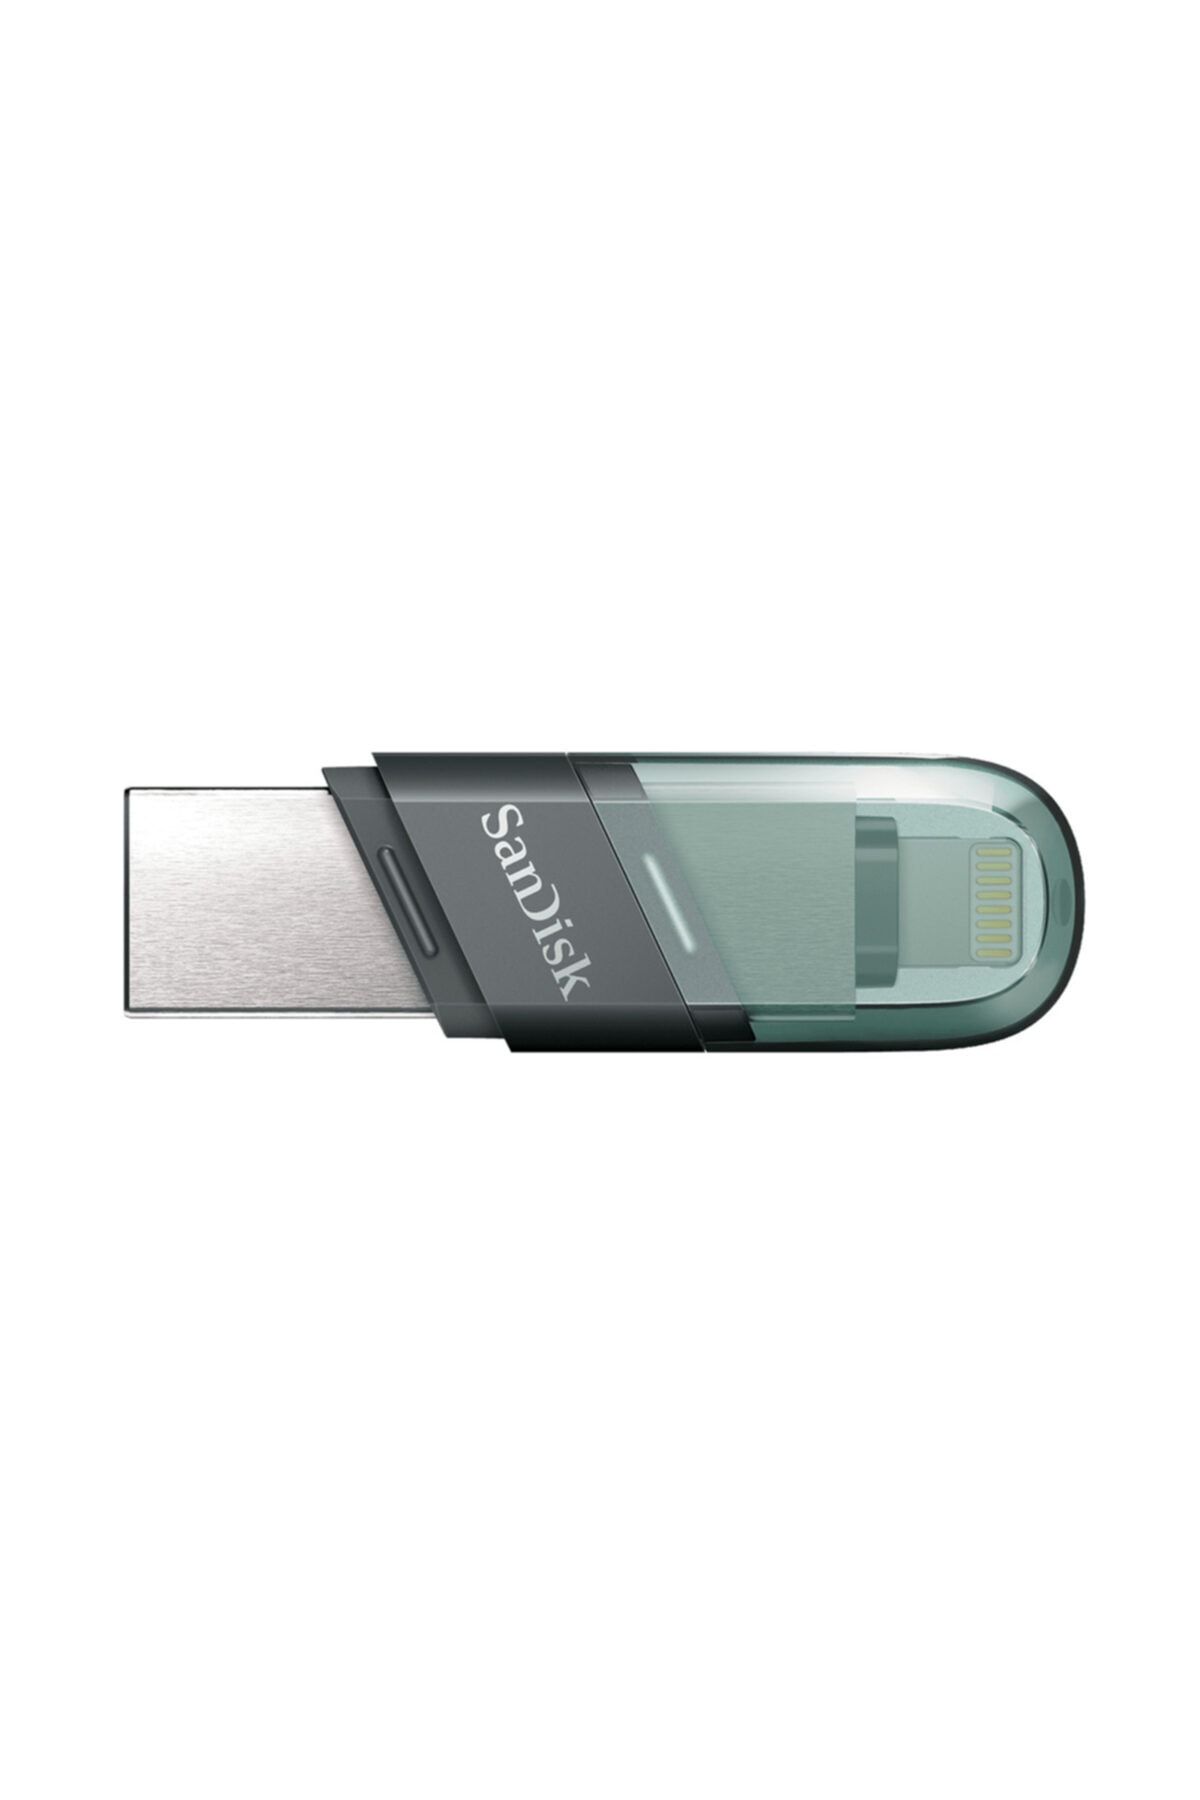 Sandisk iXpand 32GB Flash Drive Flip IOS USB 3.0